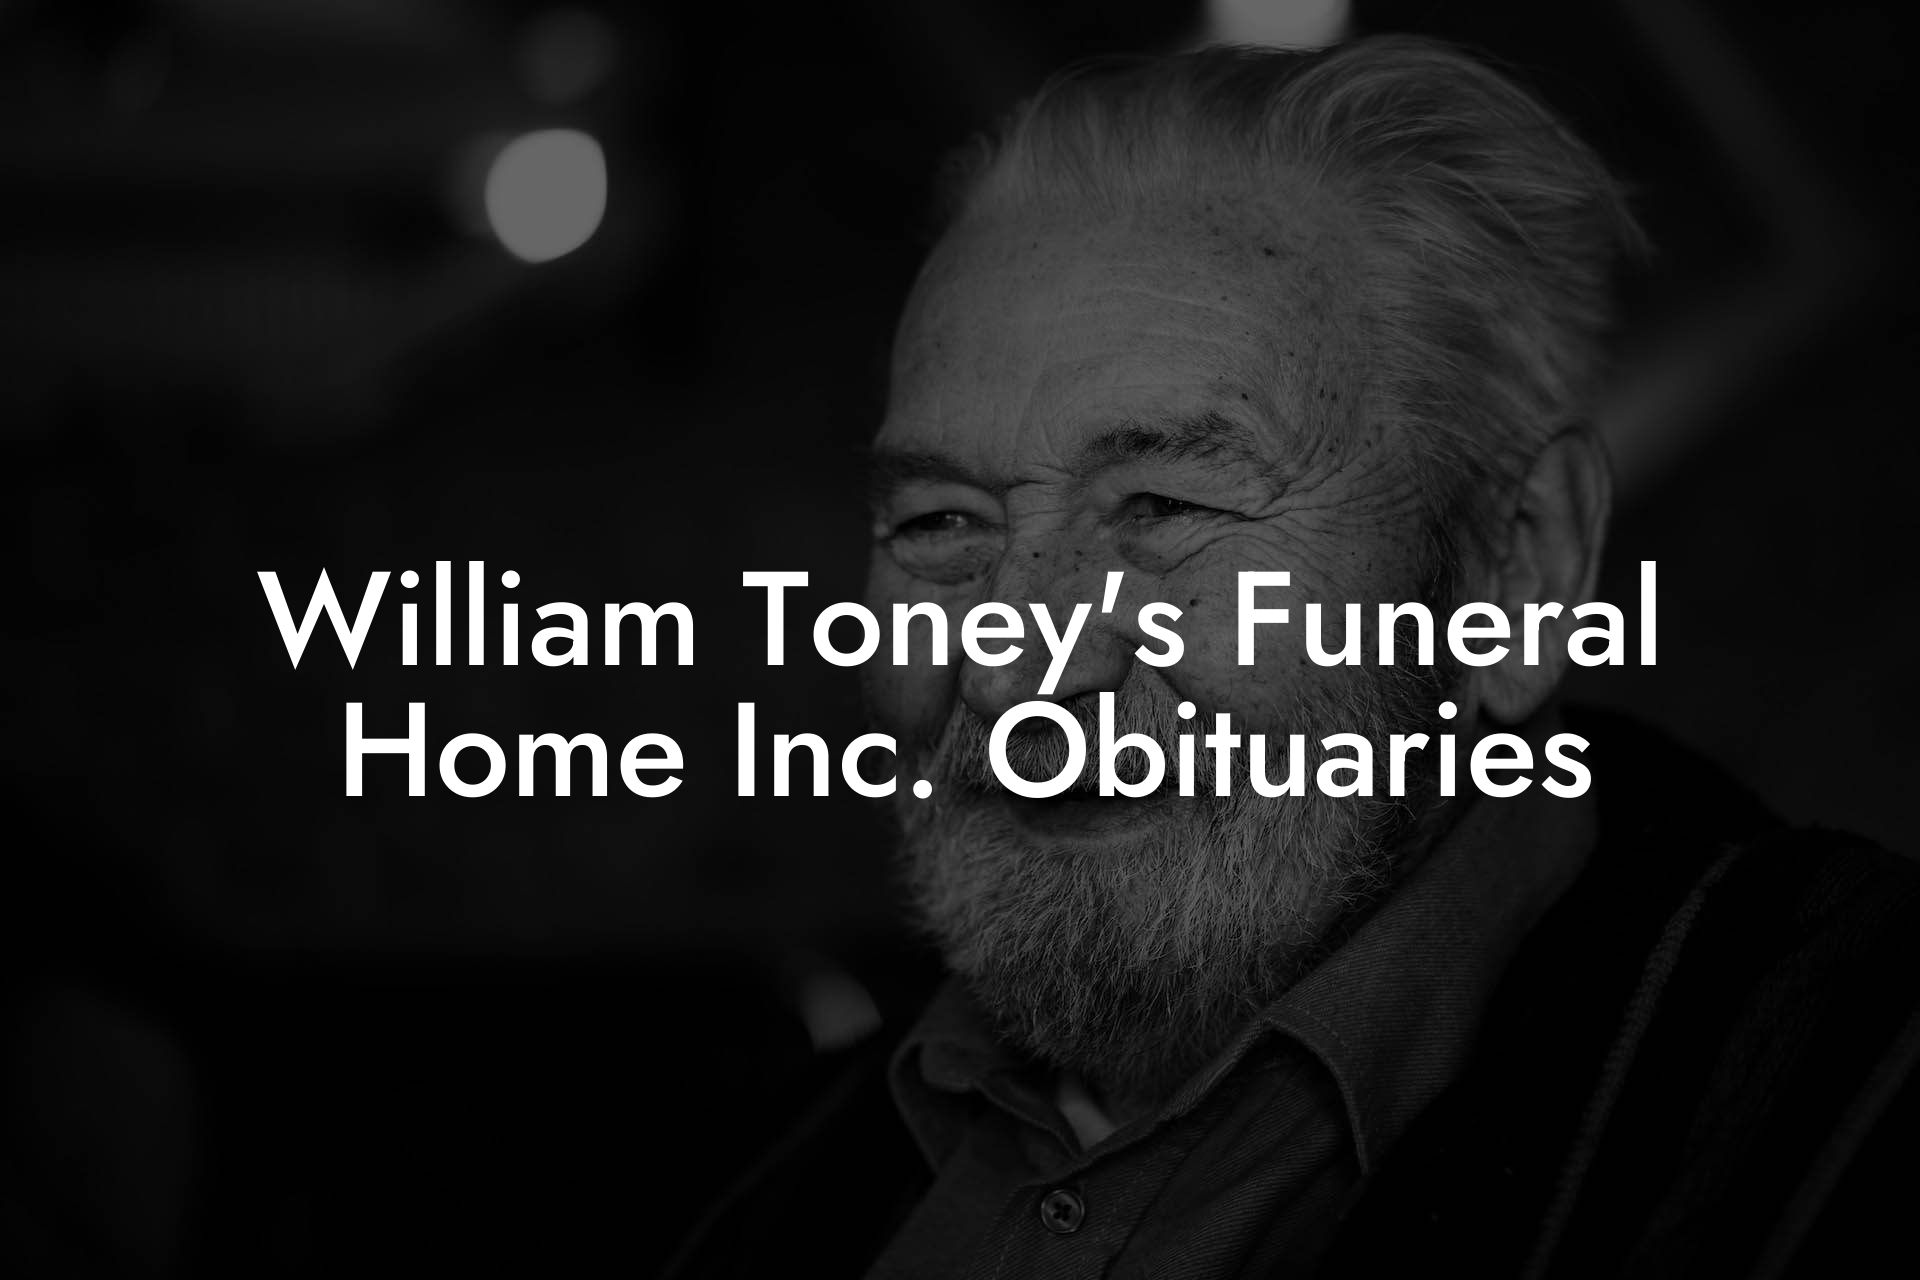 William Toney's Funeral Home Inc. Obituaries